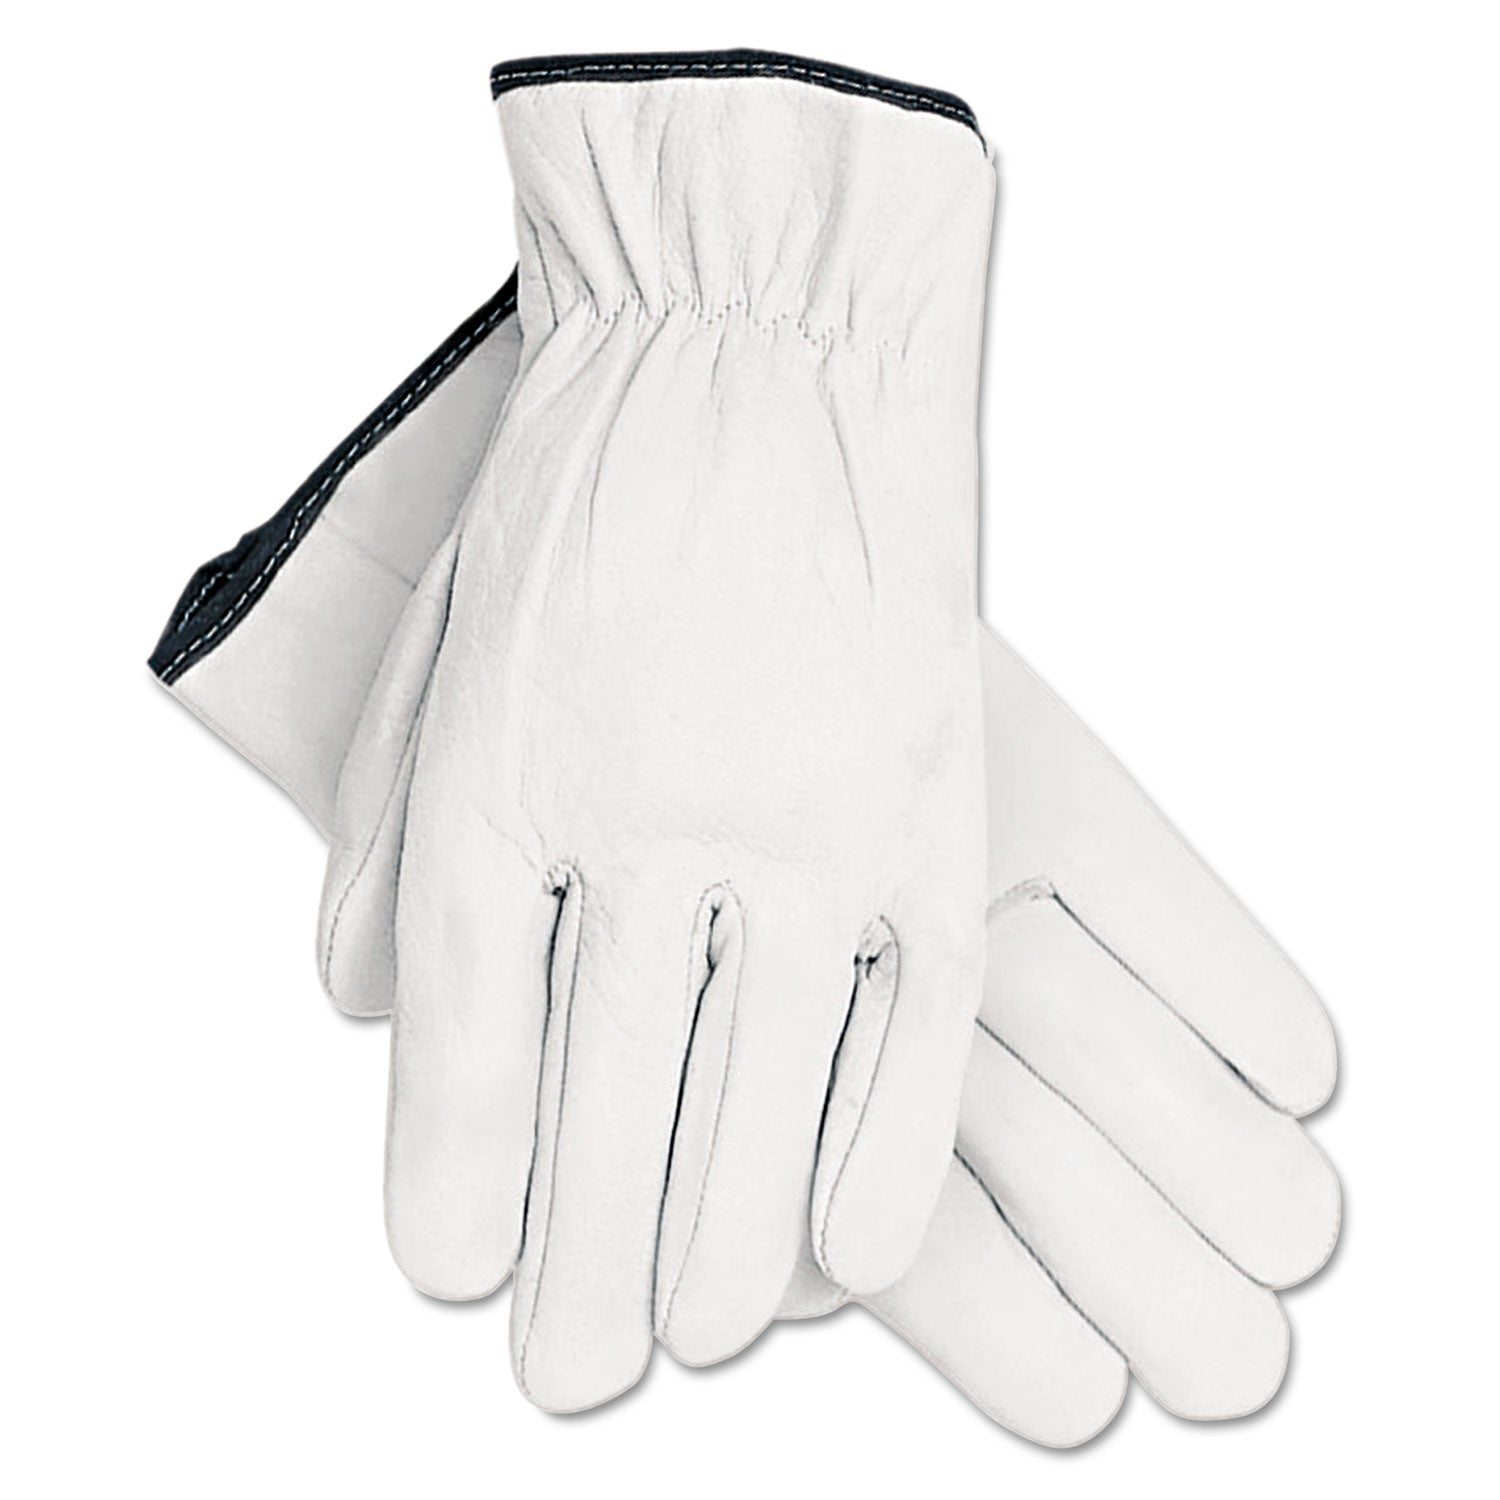 Grain Goatskin Driver Gloves, White, Large, 12 Pairs - 